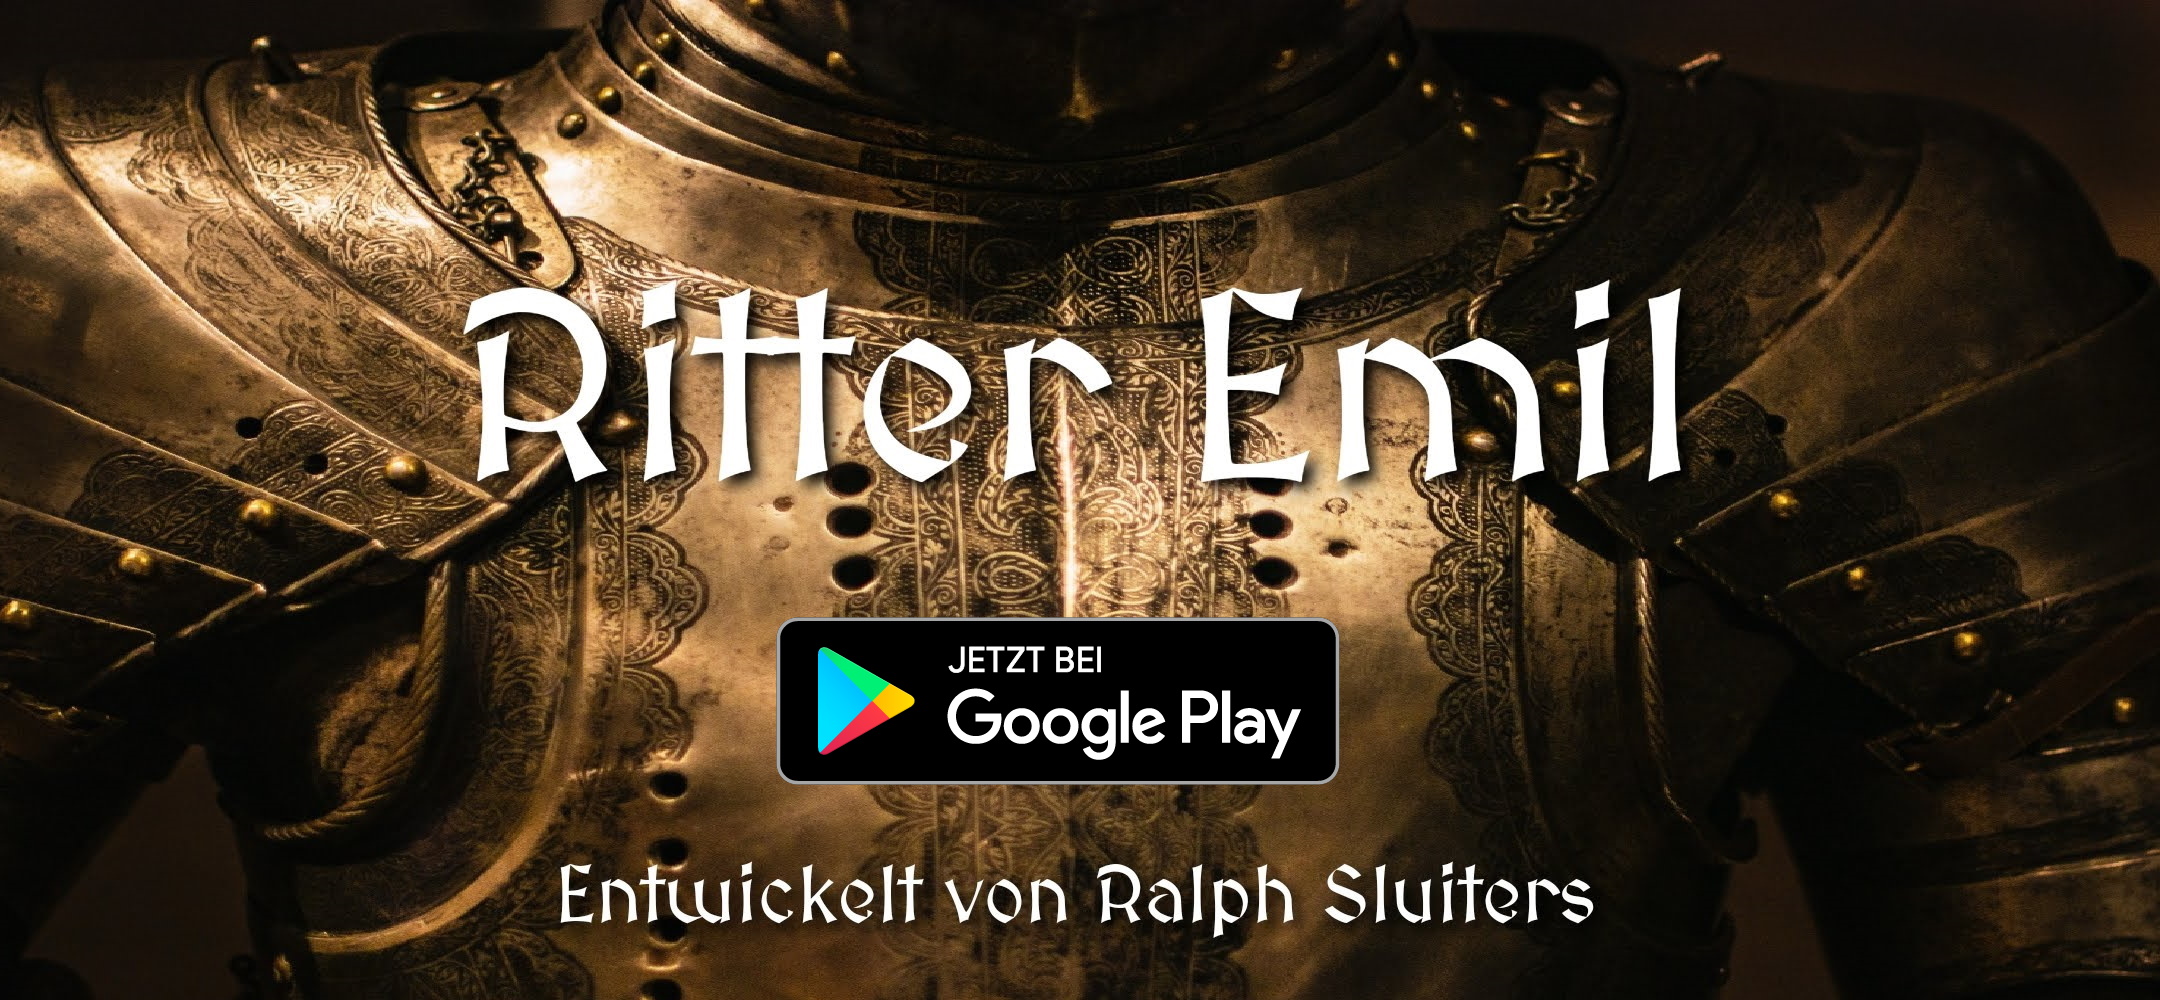 Ritter Emil Title